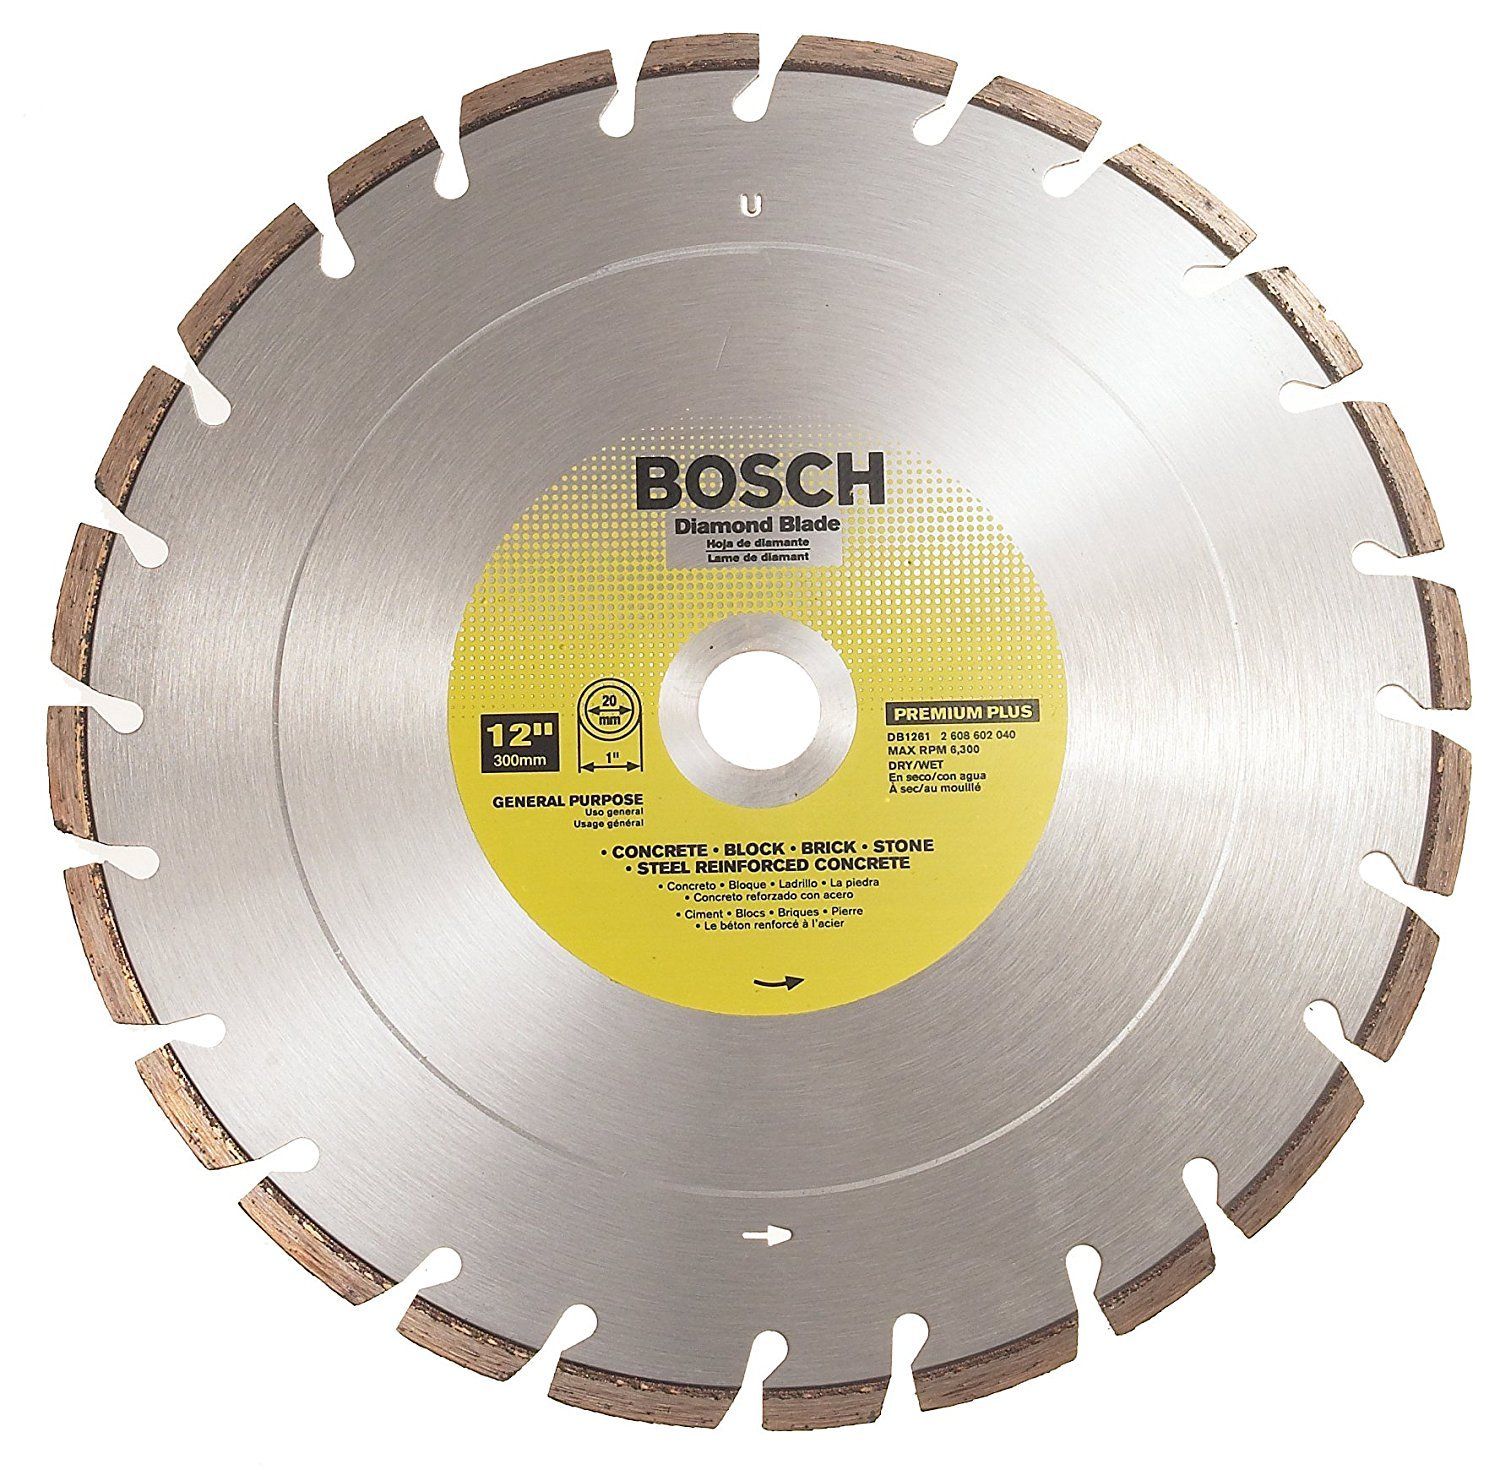 Bosch DB1261 12" Premium Plus Dry / Wet Cutting Segmented Diamond Saw Blade